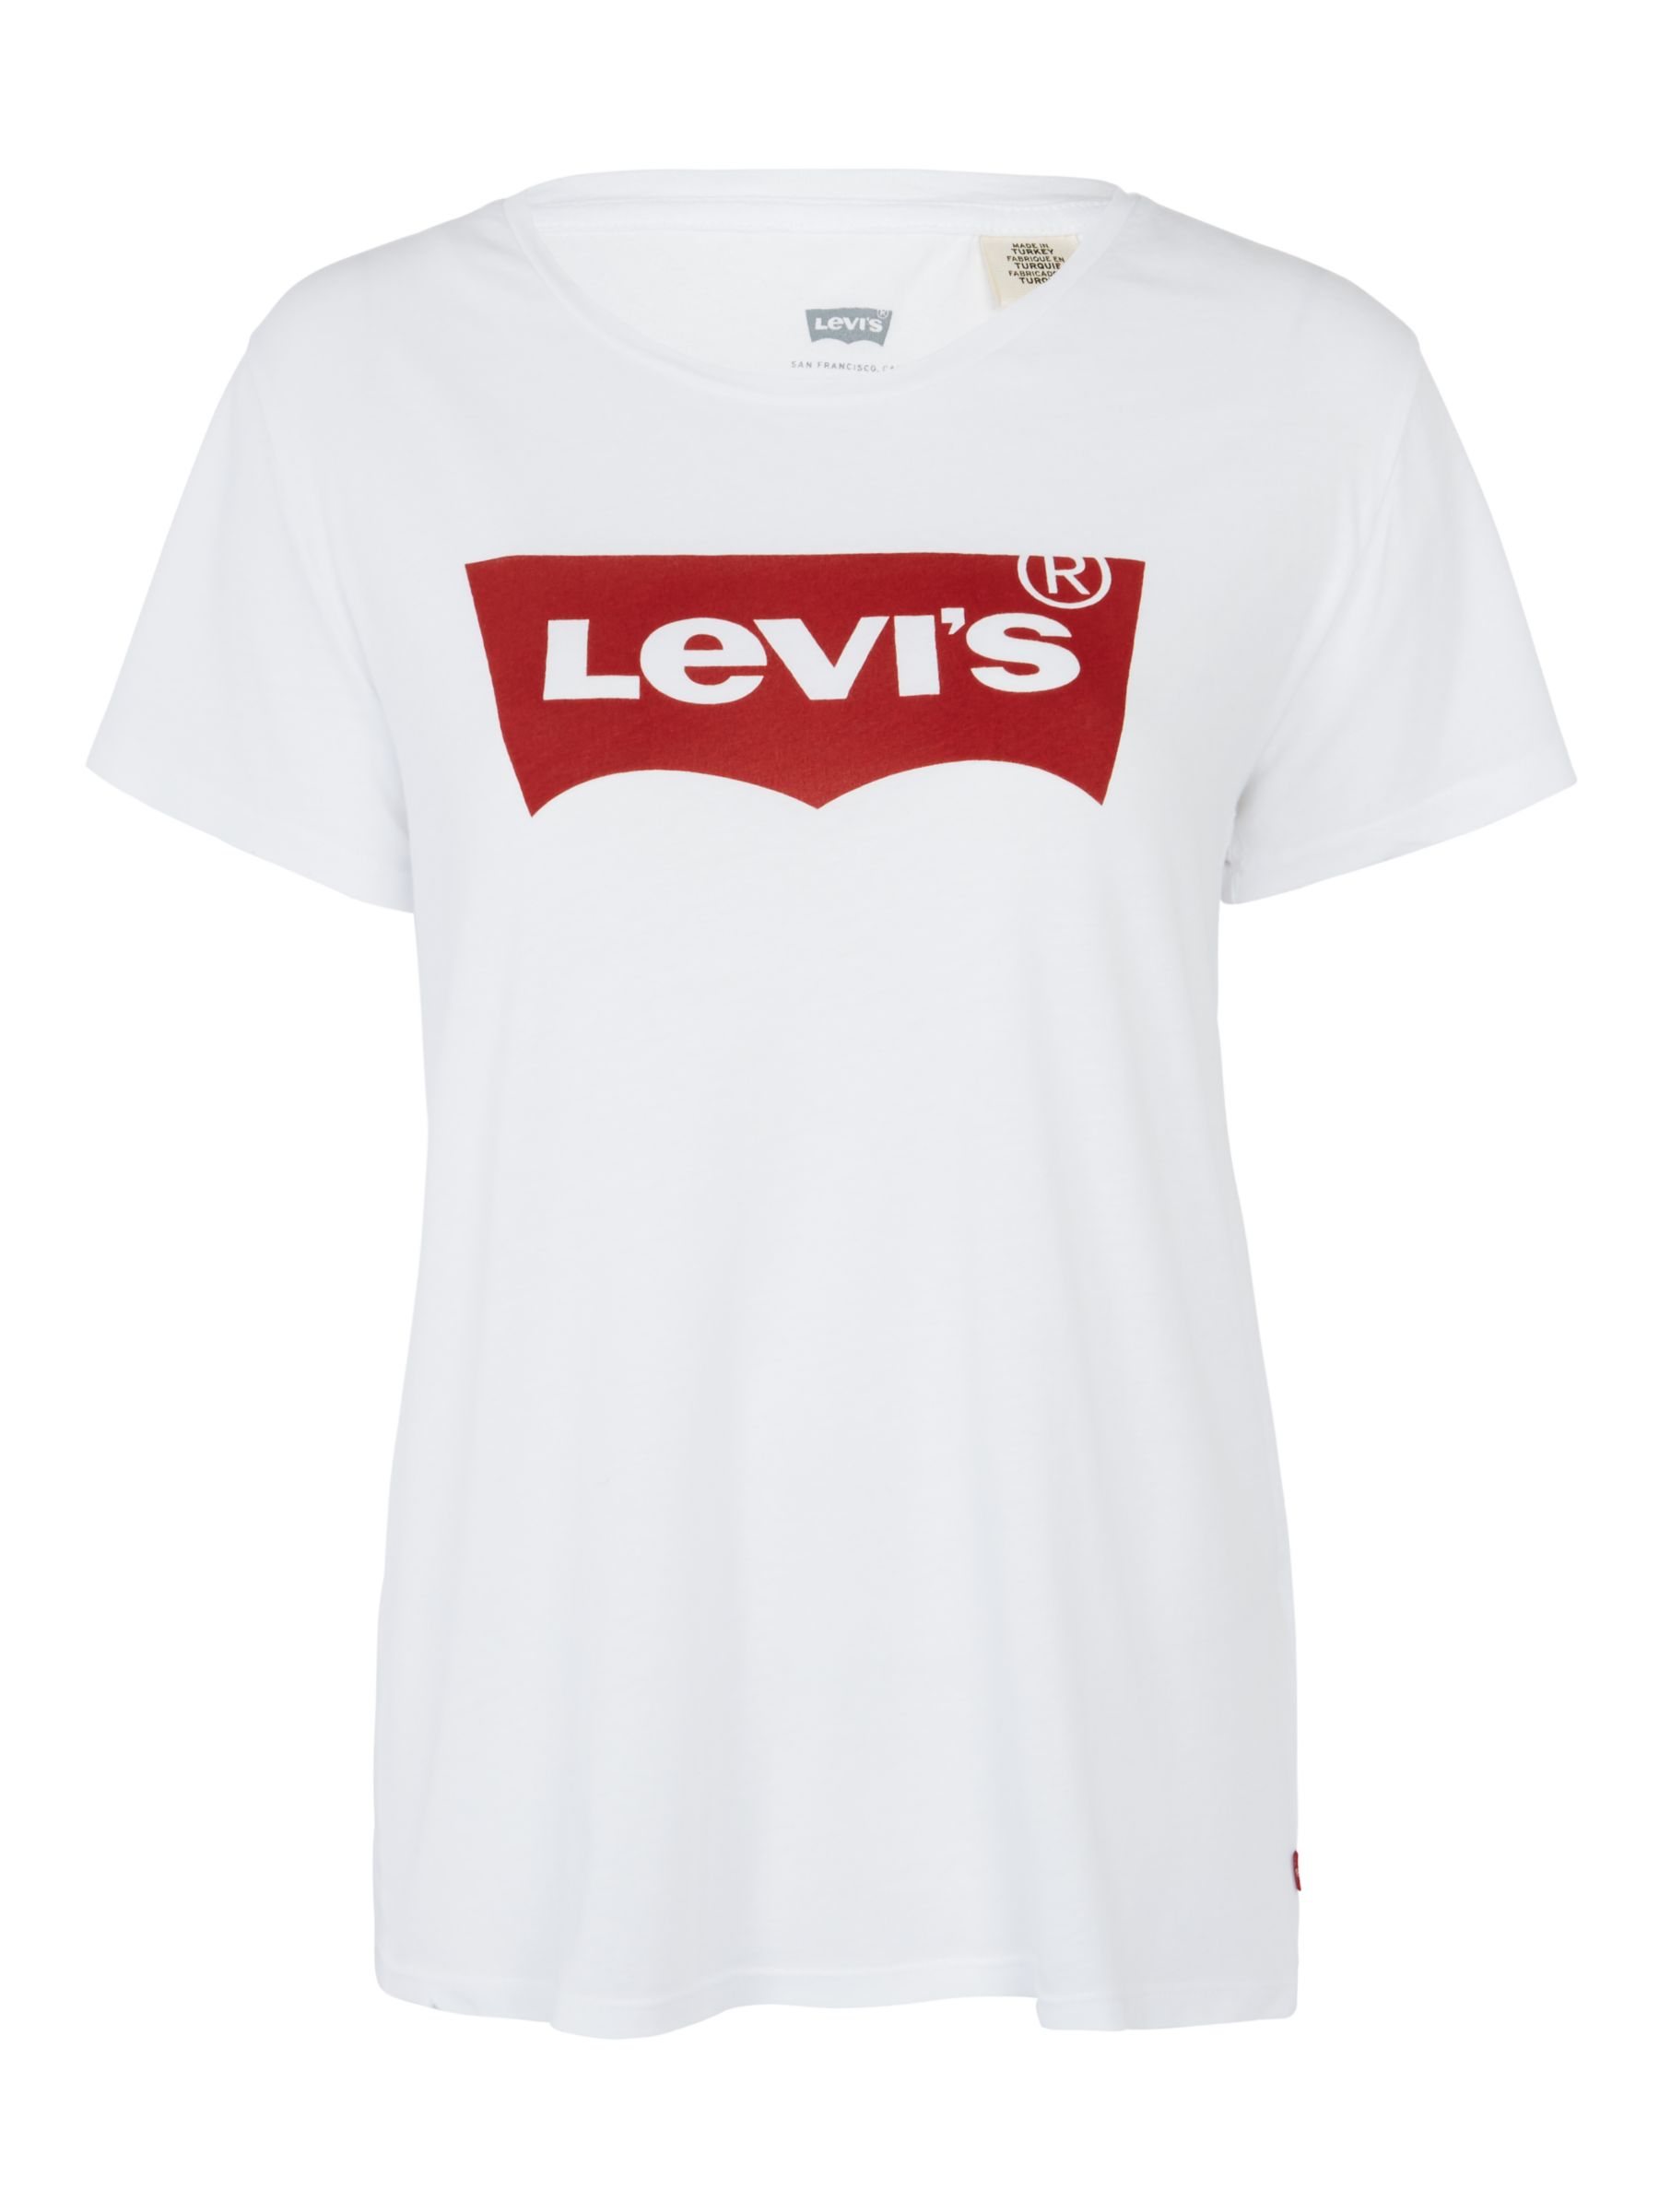 levi's perfect logo tee shirt